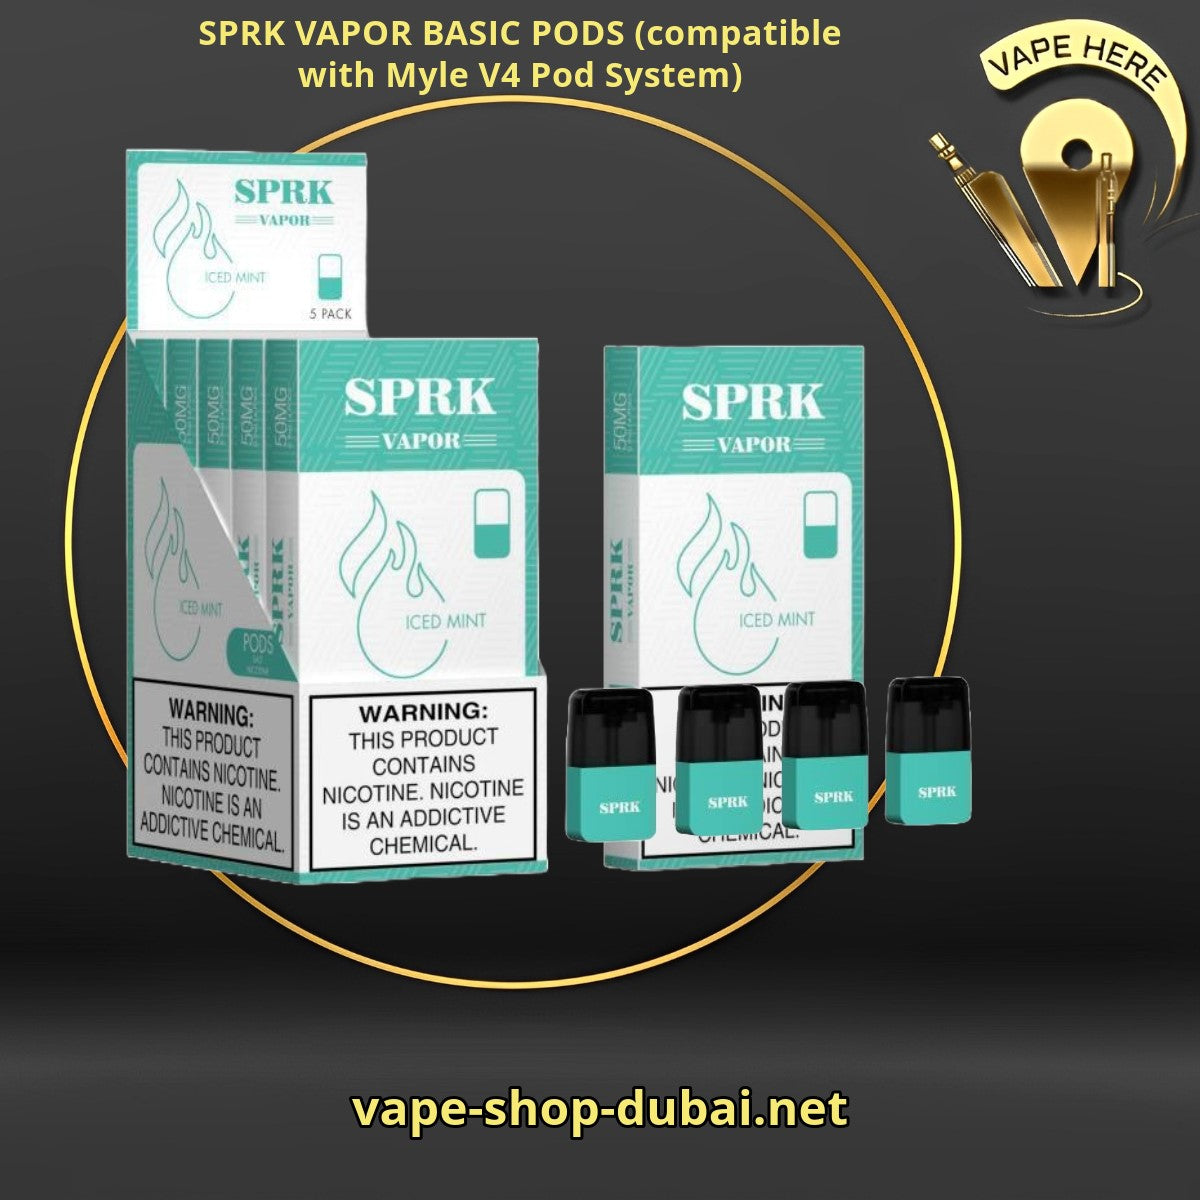 SPRK VAPOR BASIC PODS Sweet Tobacco (compatible with Myle V4 Pod System) UAE Abu Dhabi